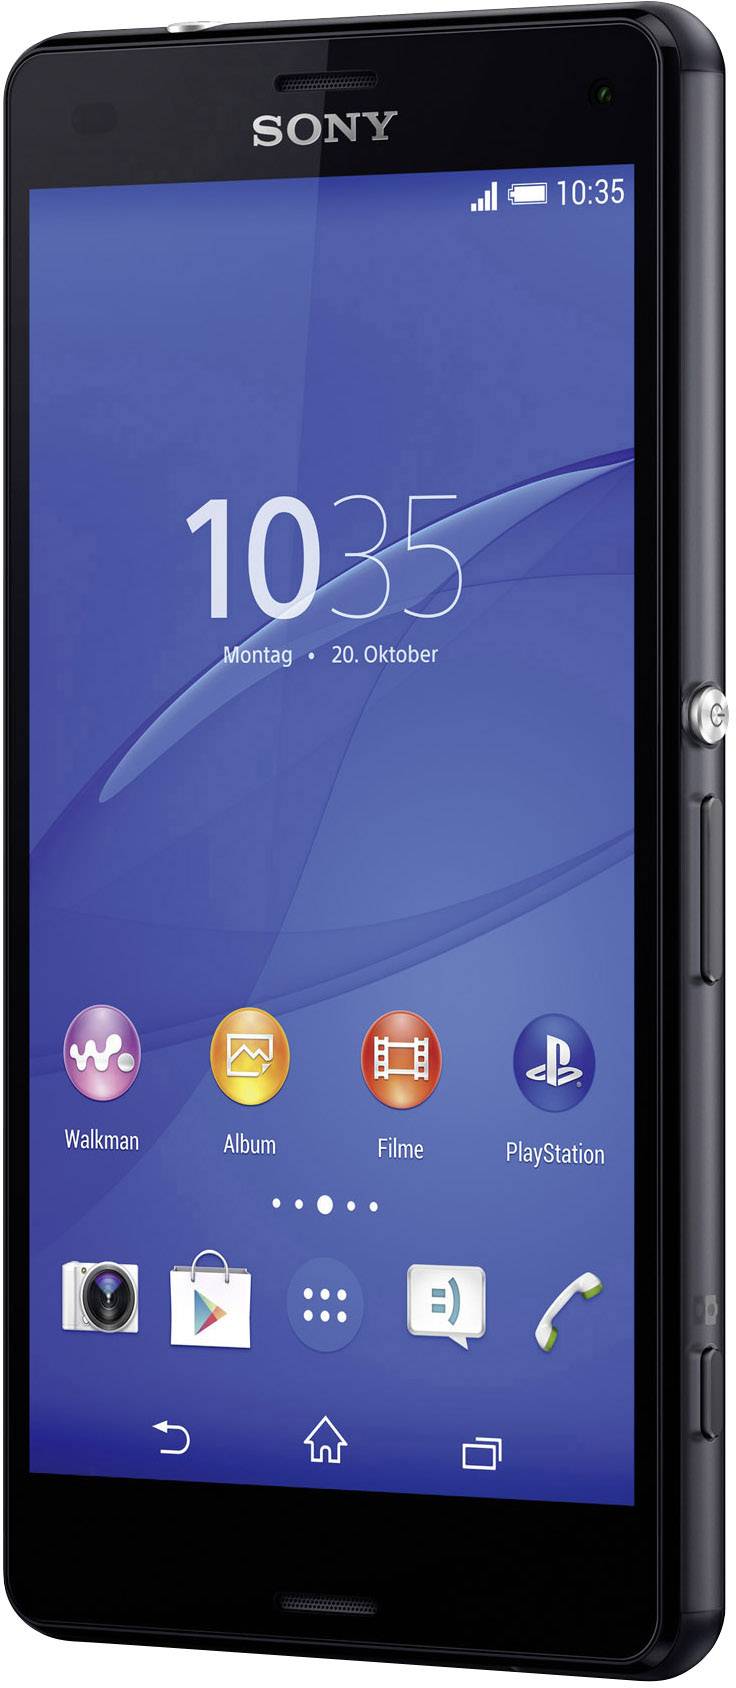 Geit spoor cocaïne Sony XPERIA Z3 COMPACT Smartphone 16 GB 4.6 inch (11.7 cm) Android 4.4  Zwart | Conrad.be